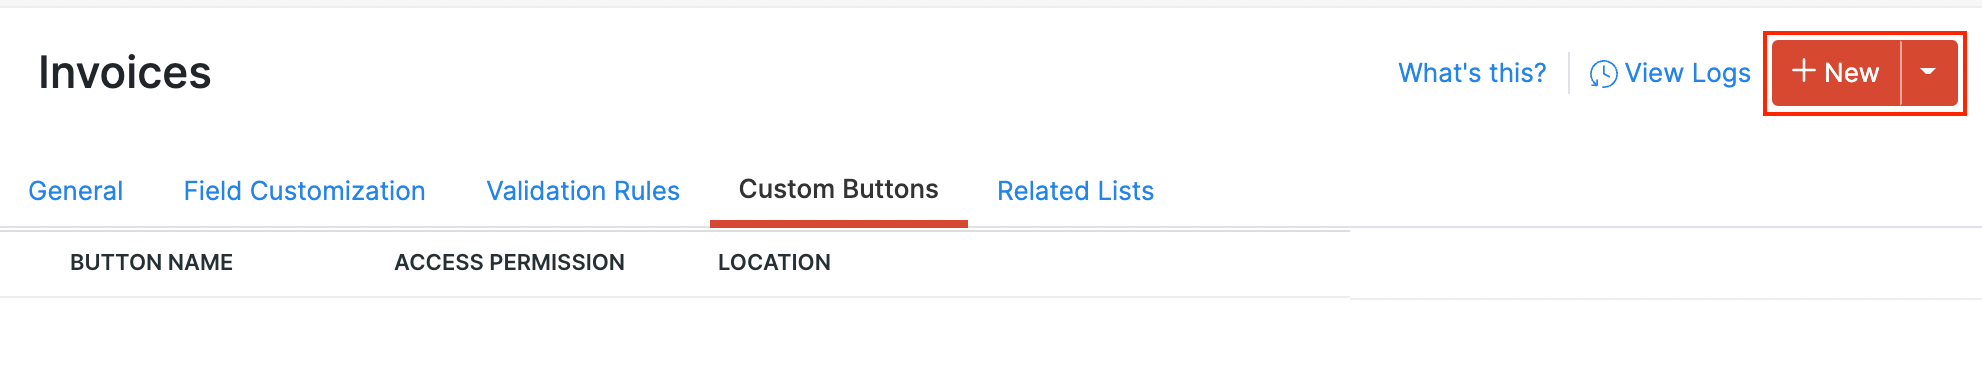 New Custom Button